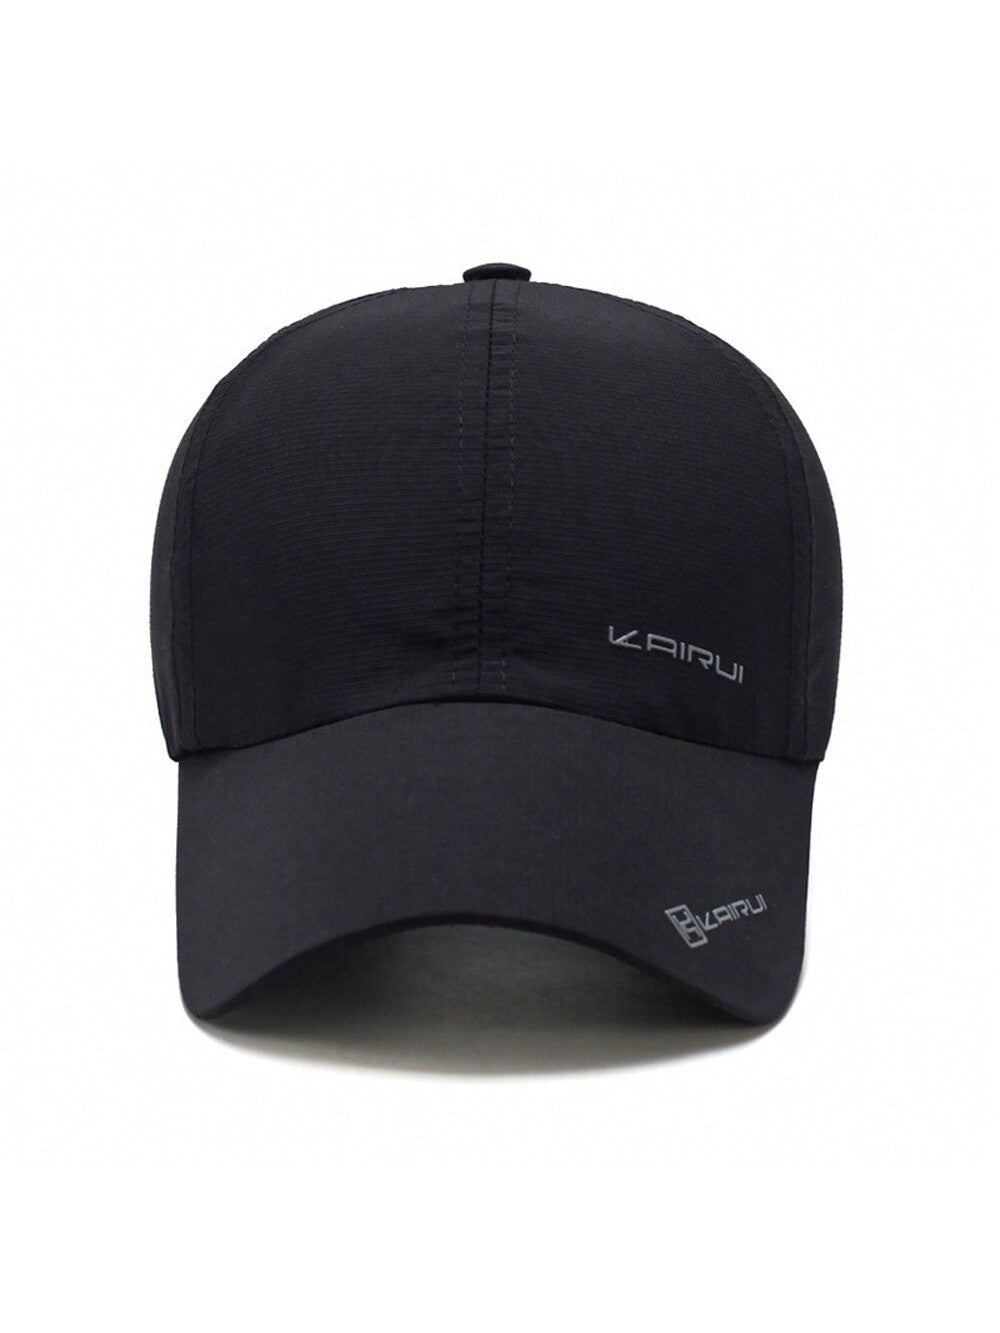 Men's Black Baseball Lightweight Quick-drying Outdoor Sun Protection Cap Hat 💜